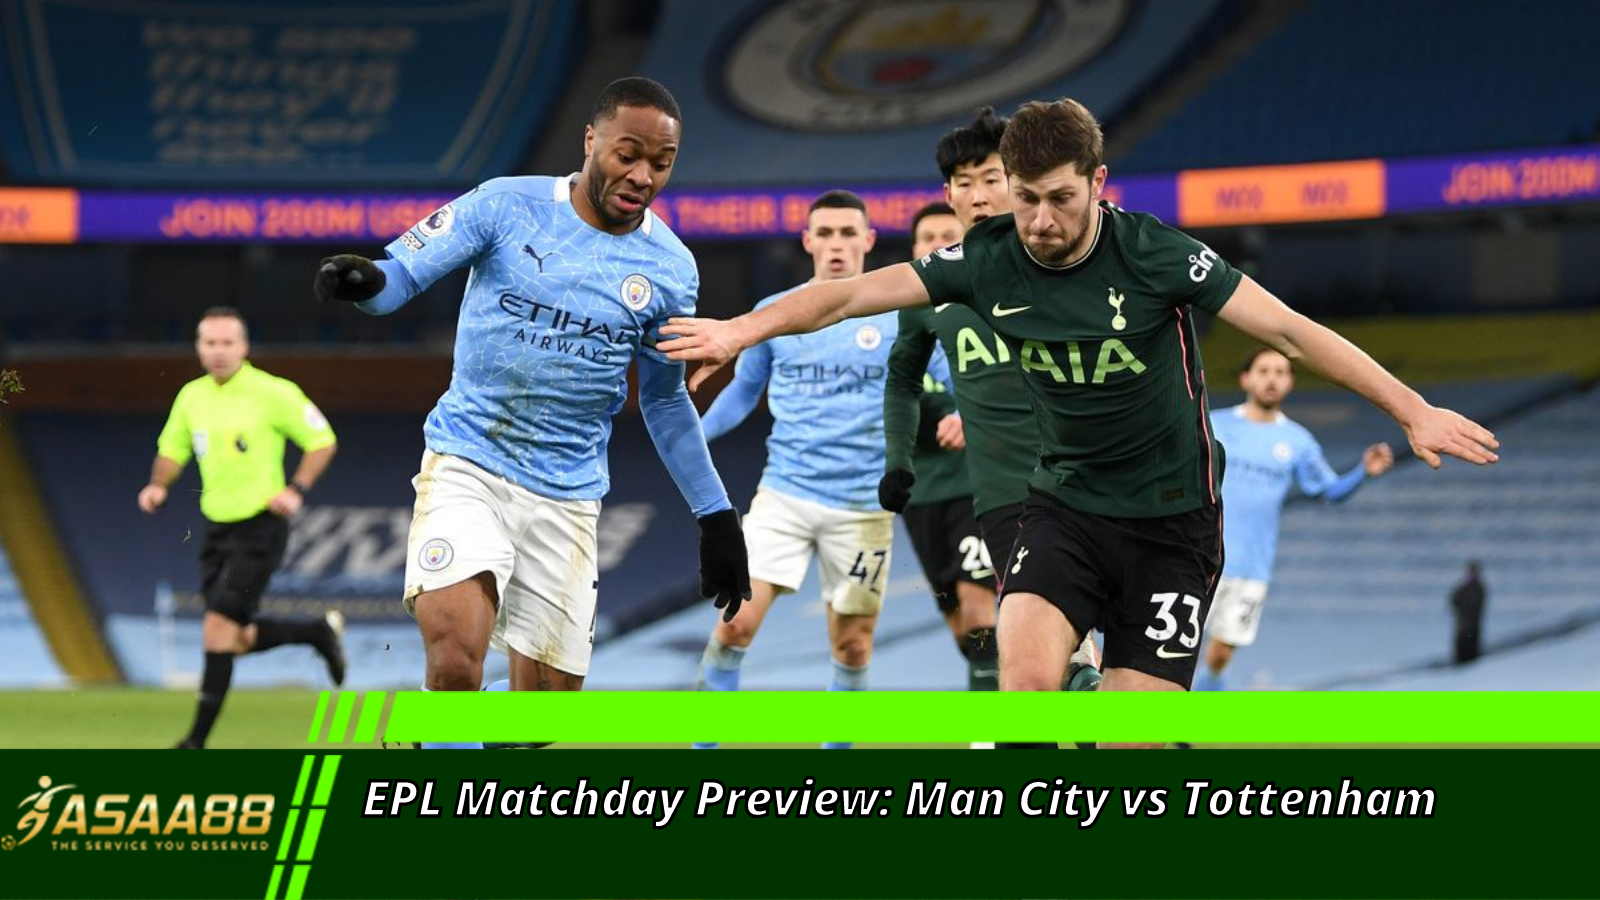 EPL Matchday Preview: Man City vs Tottenham